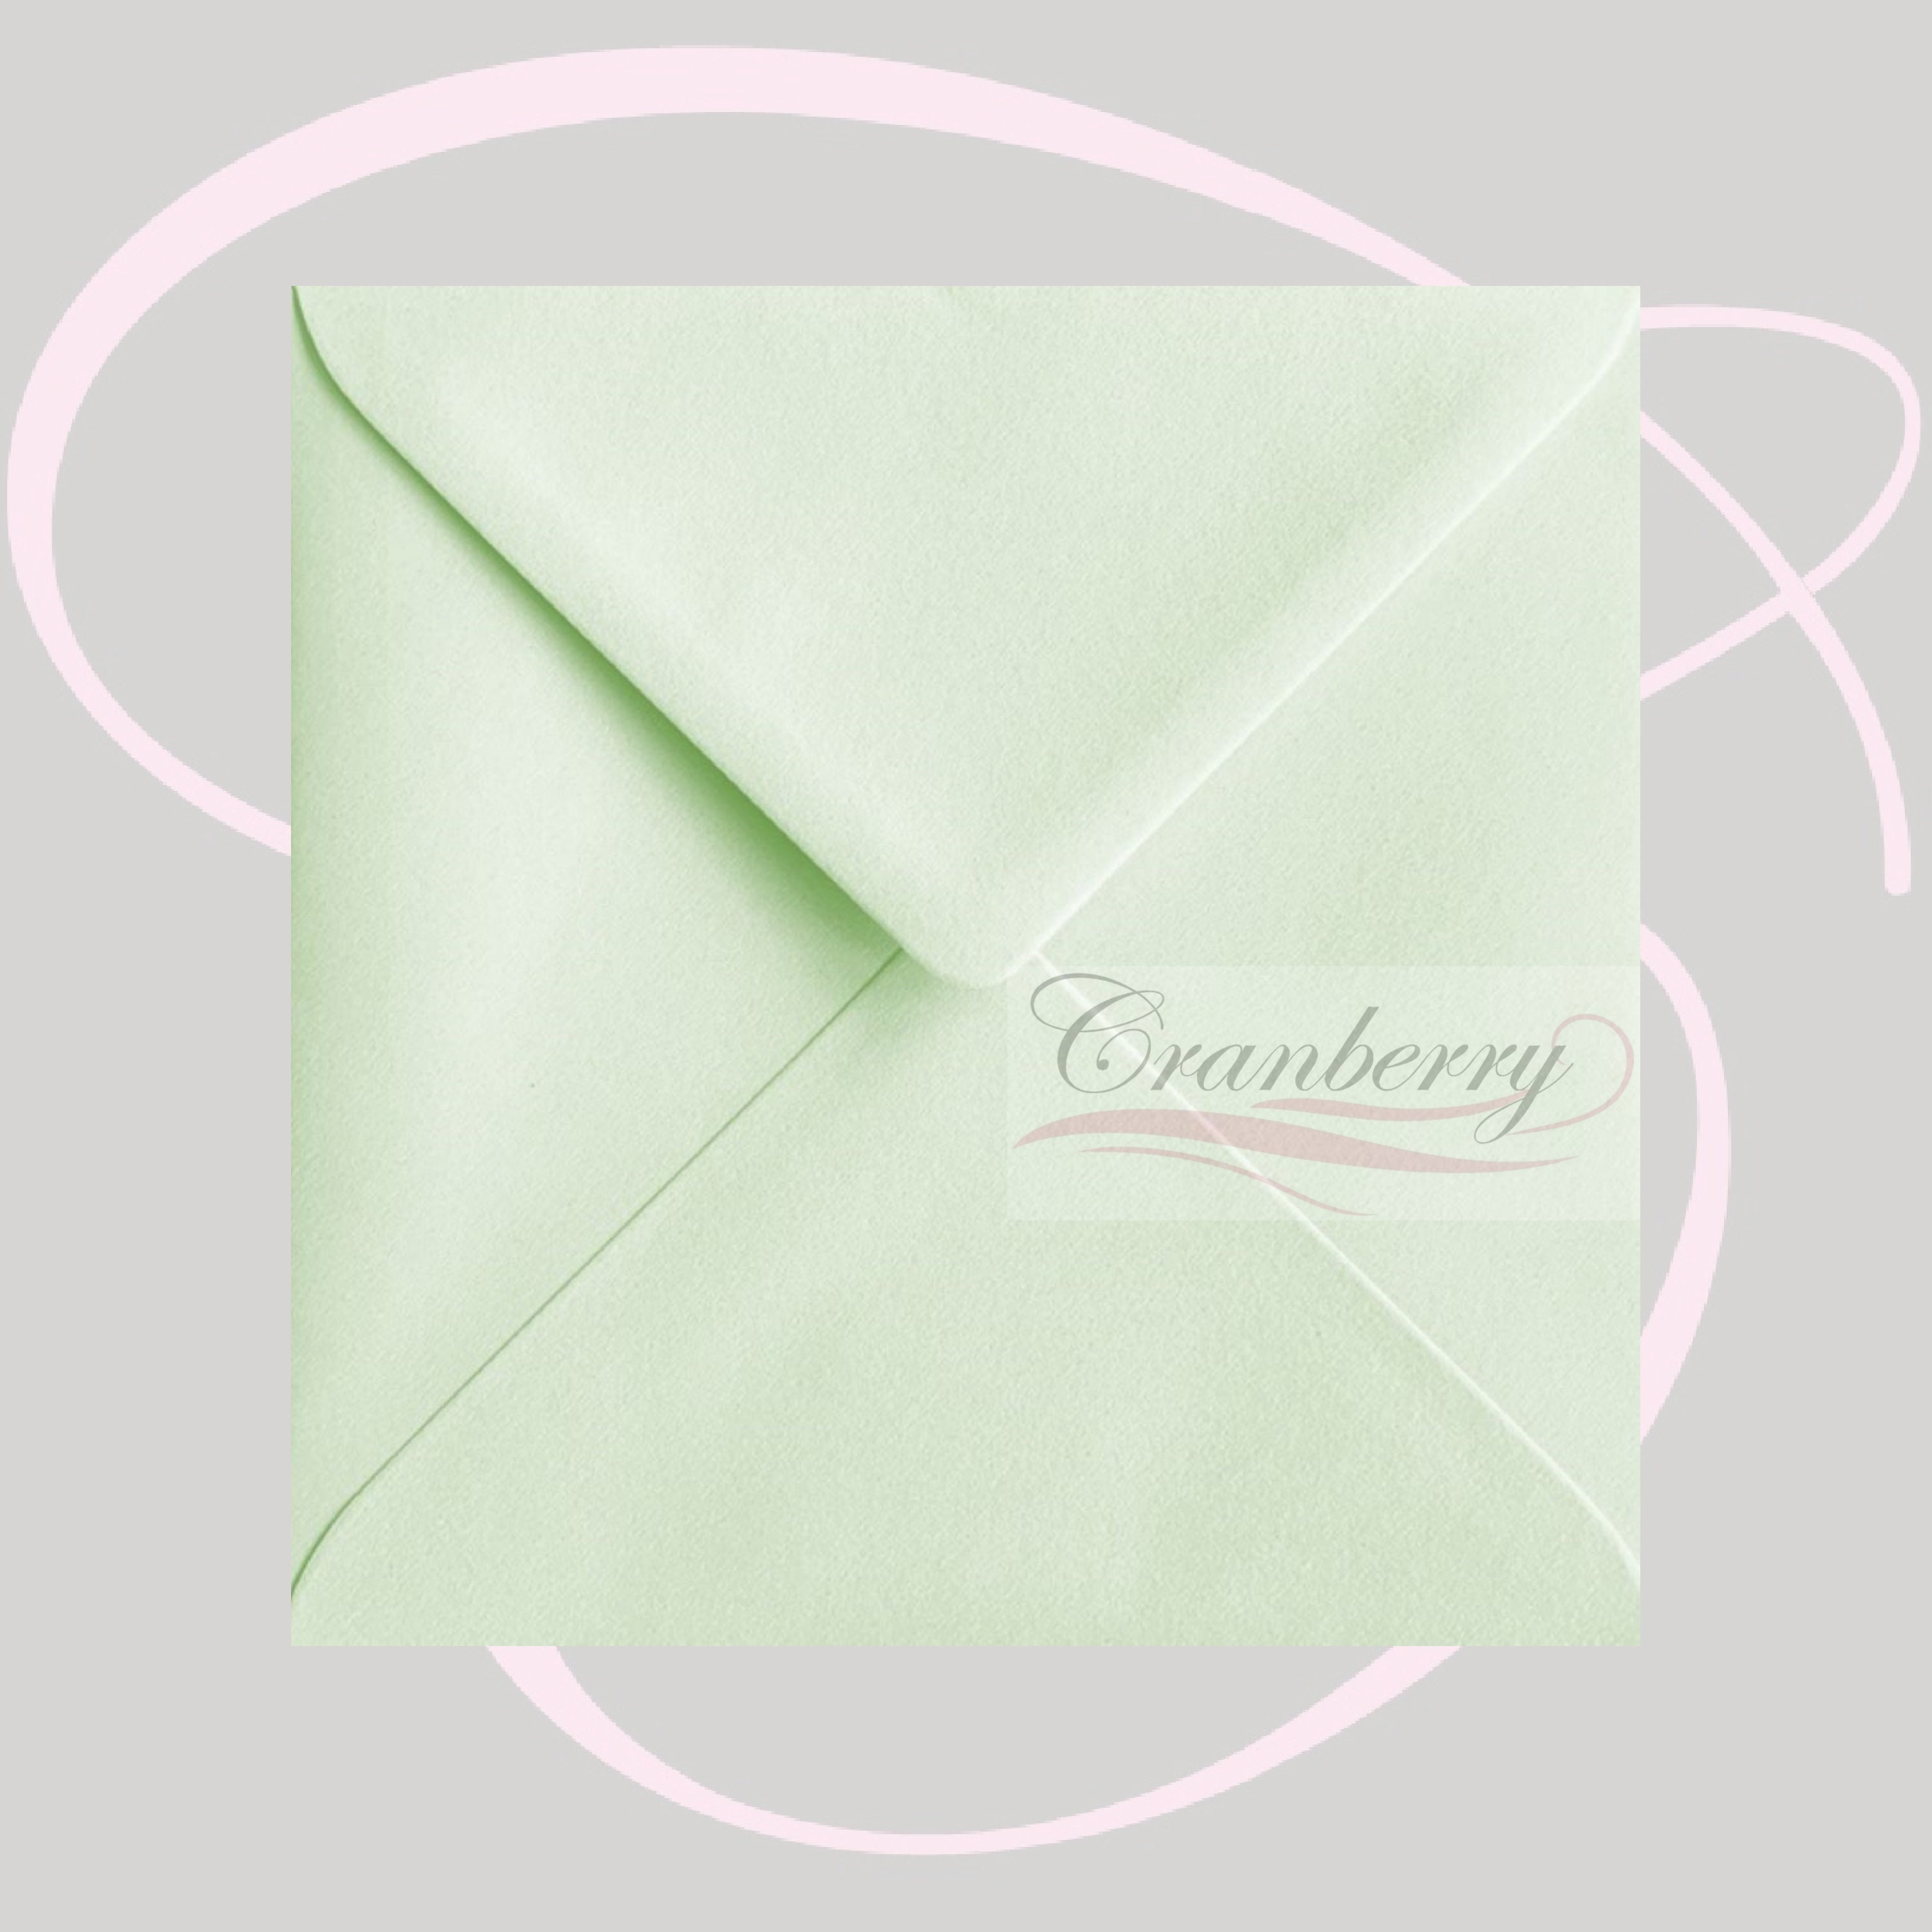  6.8 X 4 Inches Colored Envelopes Vintage Envelope